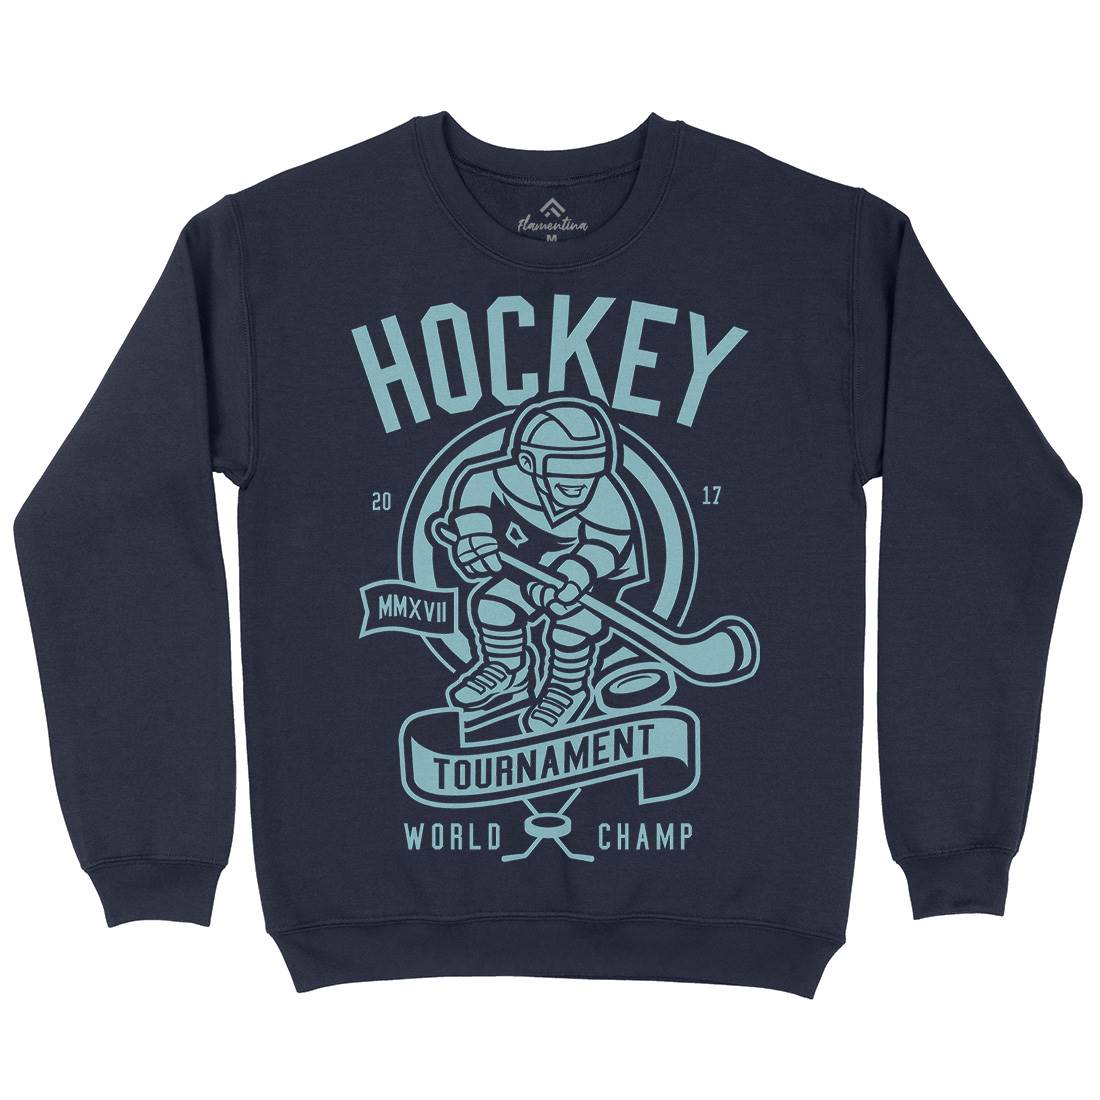 Hockey Kids Crew Neck Sweatshirt Sport A240